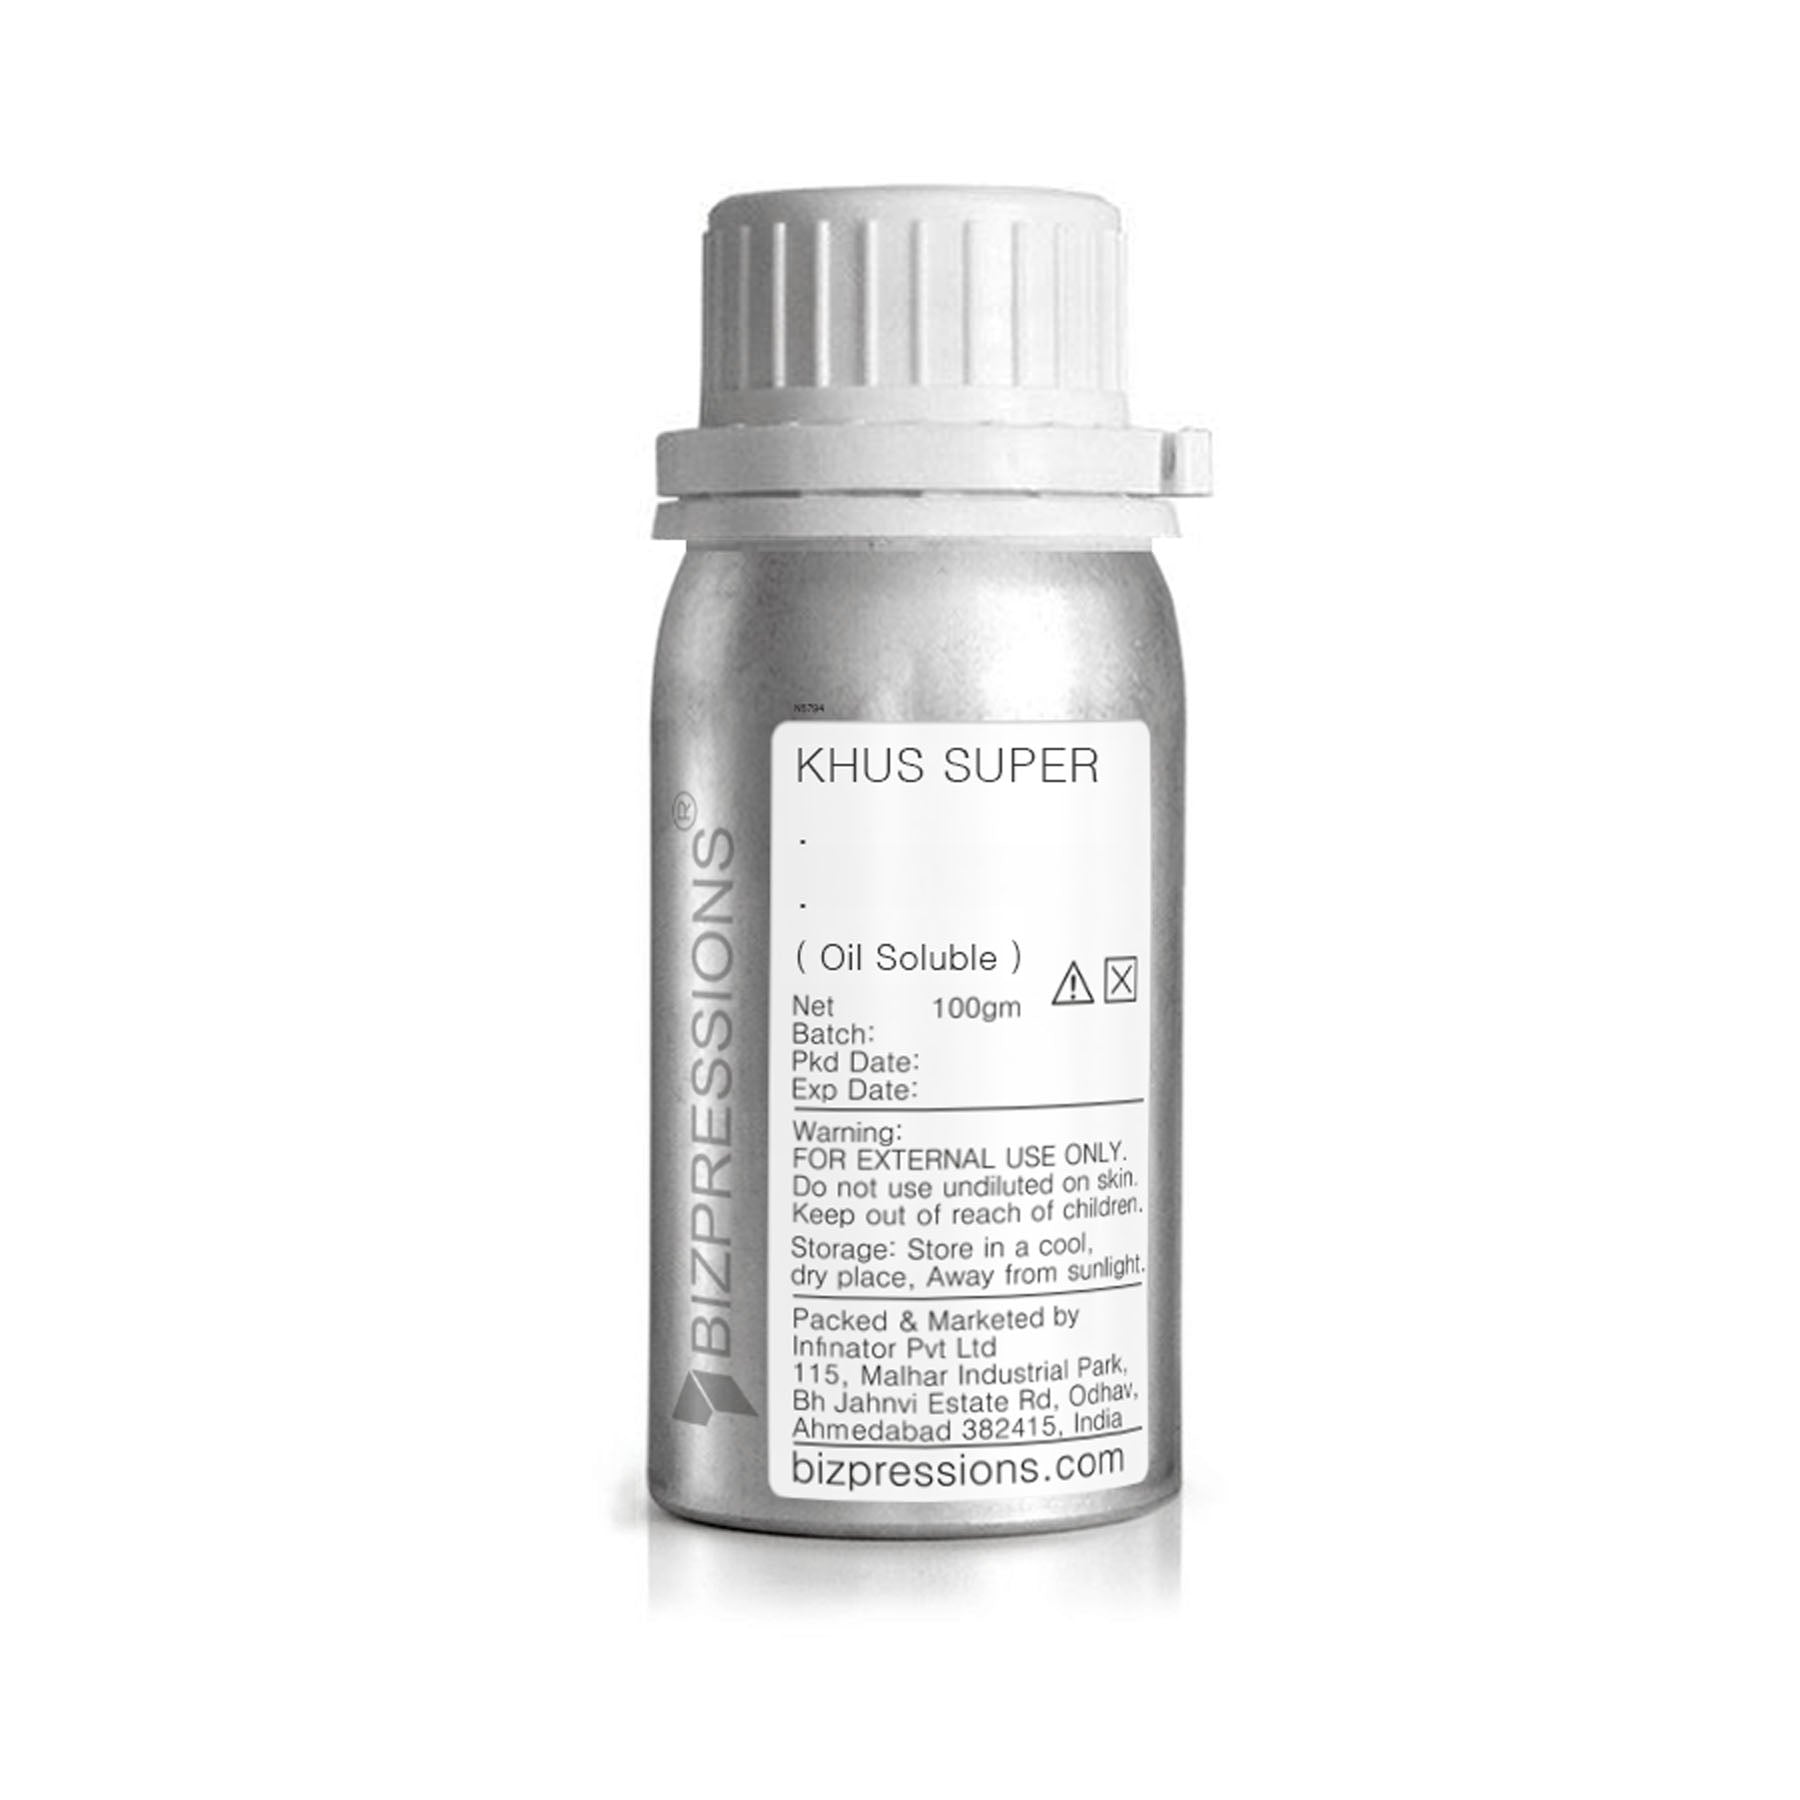 KHUS SUPER - Fragrance ( Oil Soluble ) - 100 gm